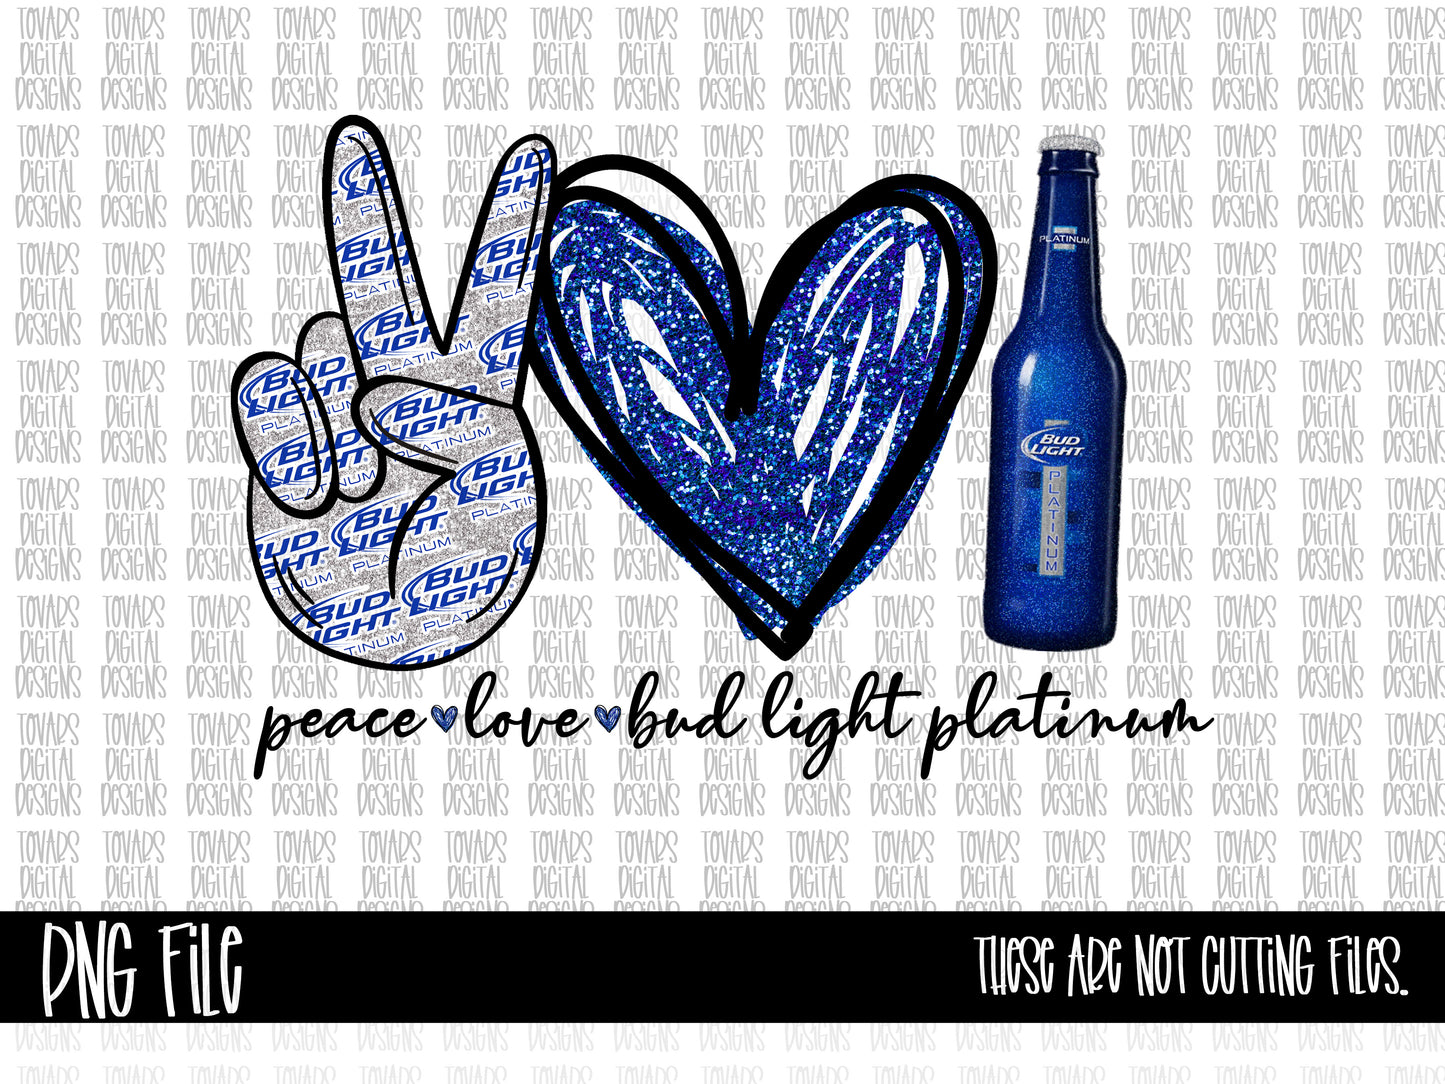 Peace love Bud light Platinum PNG FILE